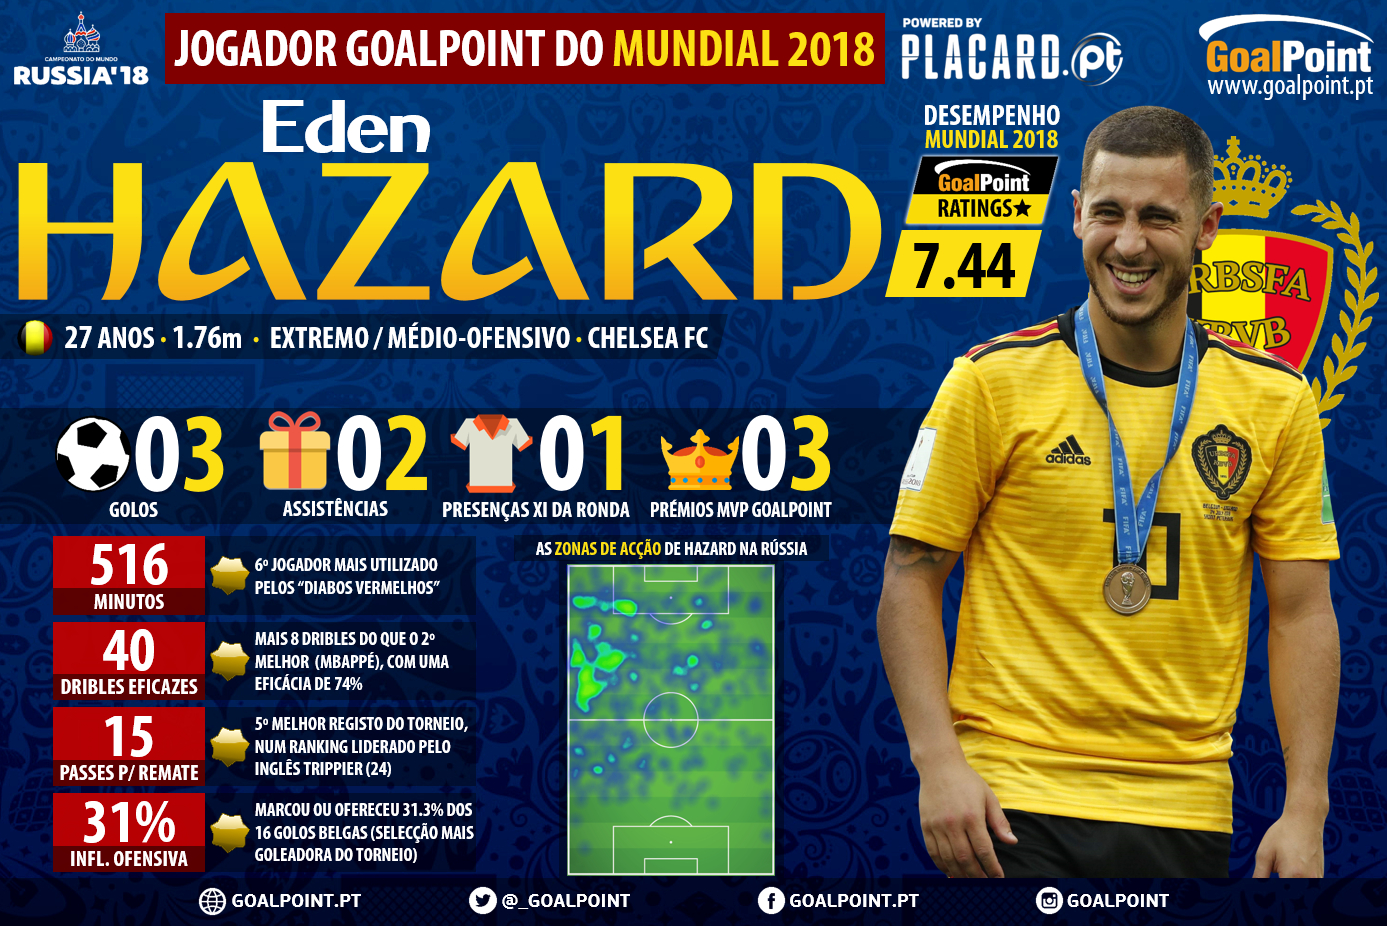 GoalPoint-Jogador-Mundial-2018-Eden-Hazard-Belgica-2-infog